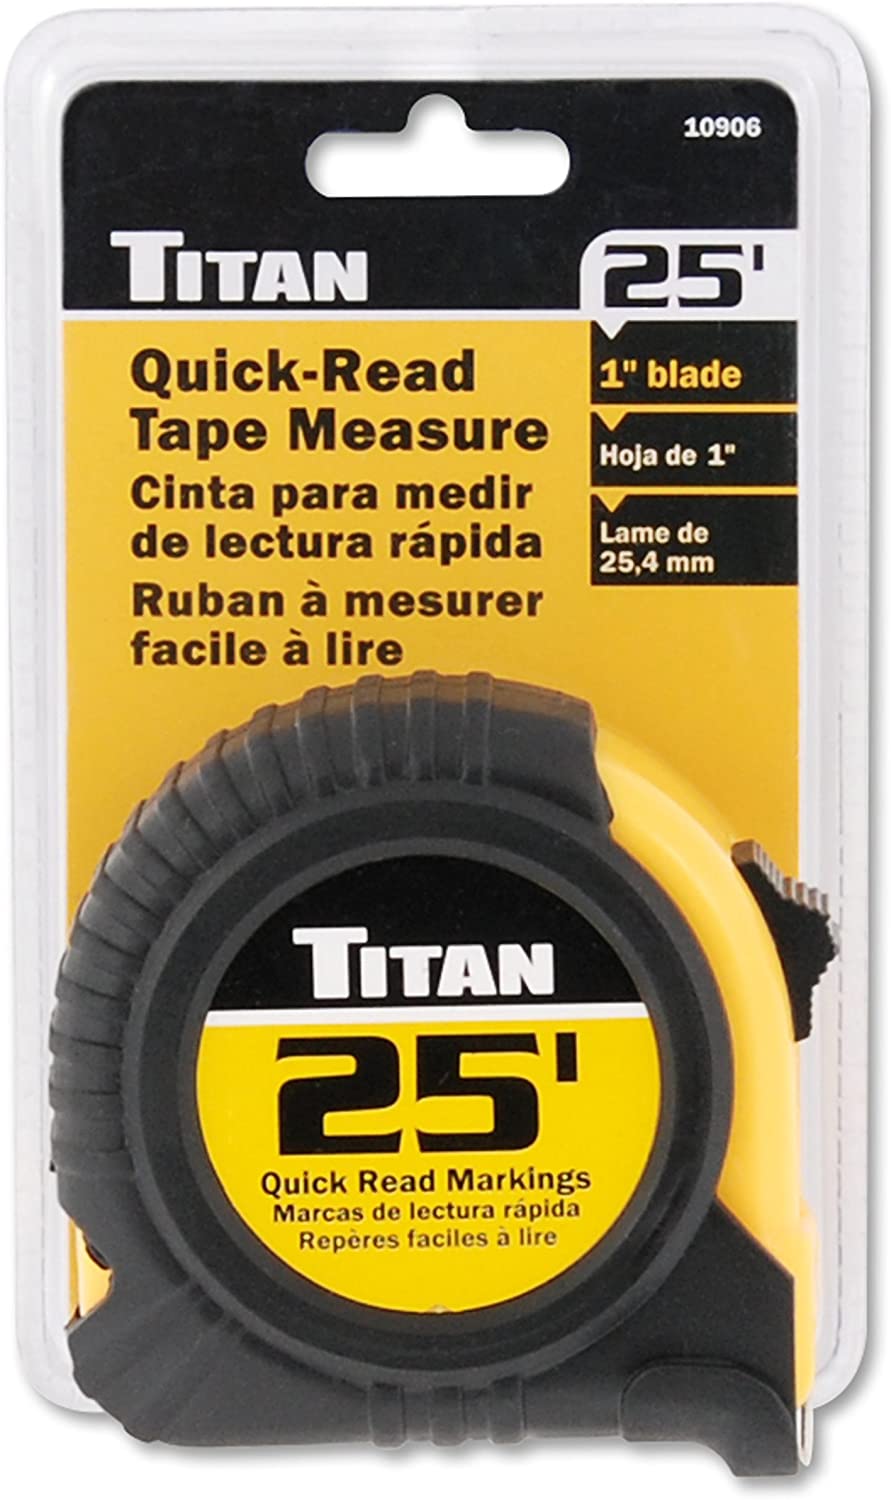 TITAN 25' Tape Measure Quick-Read 1